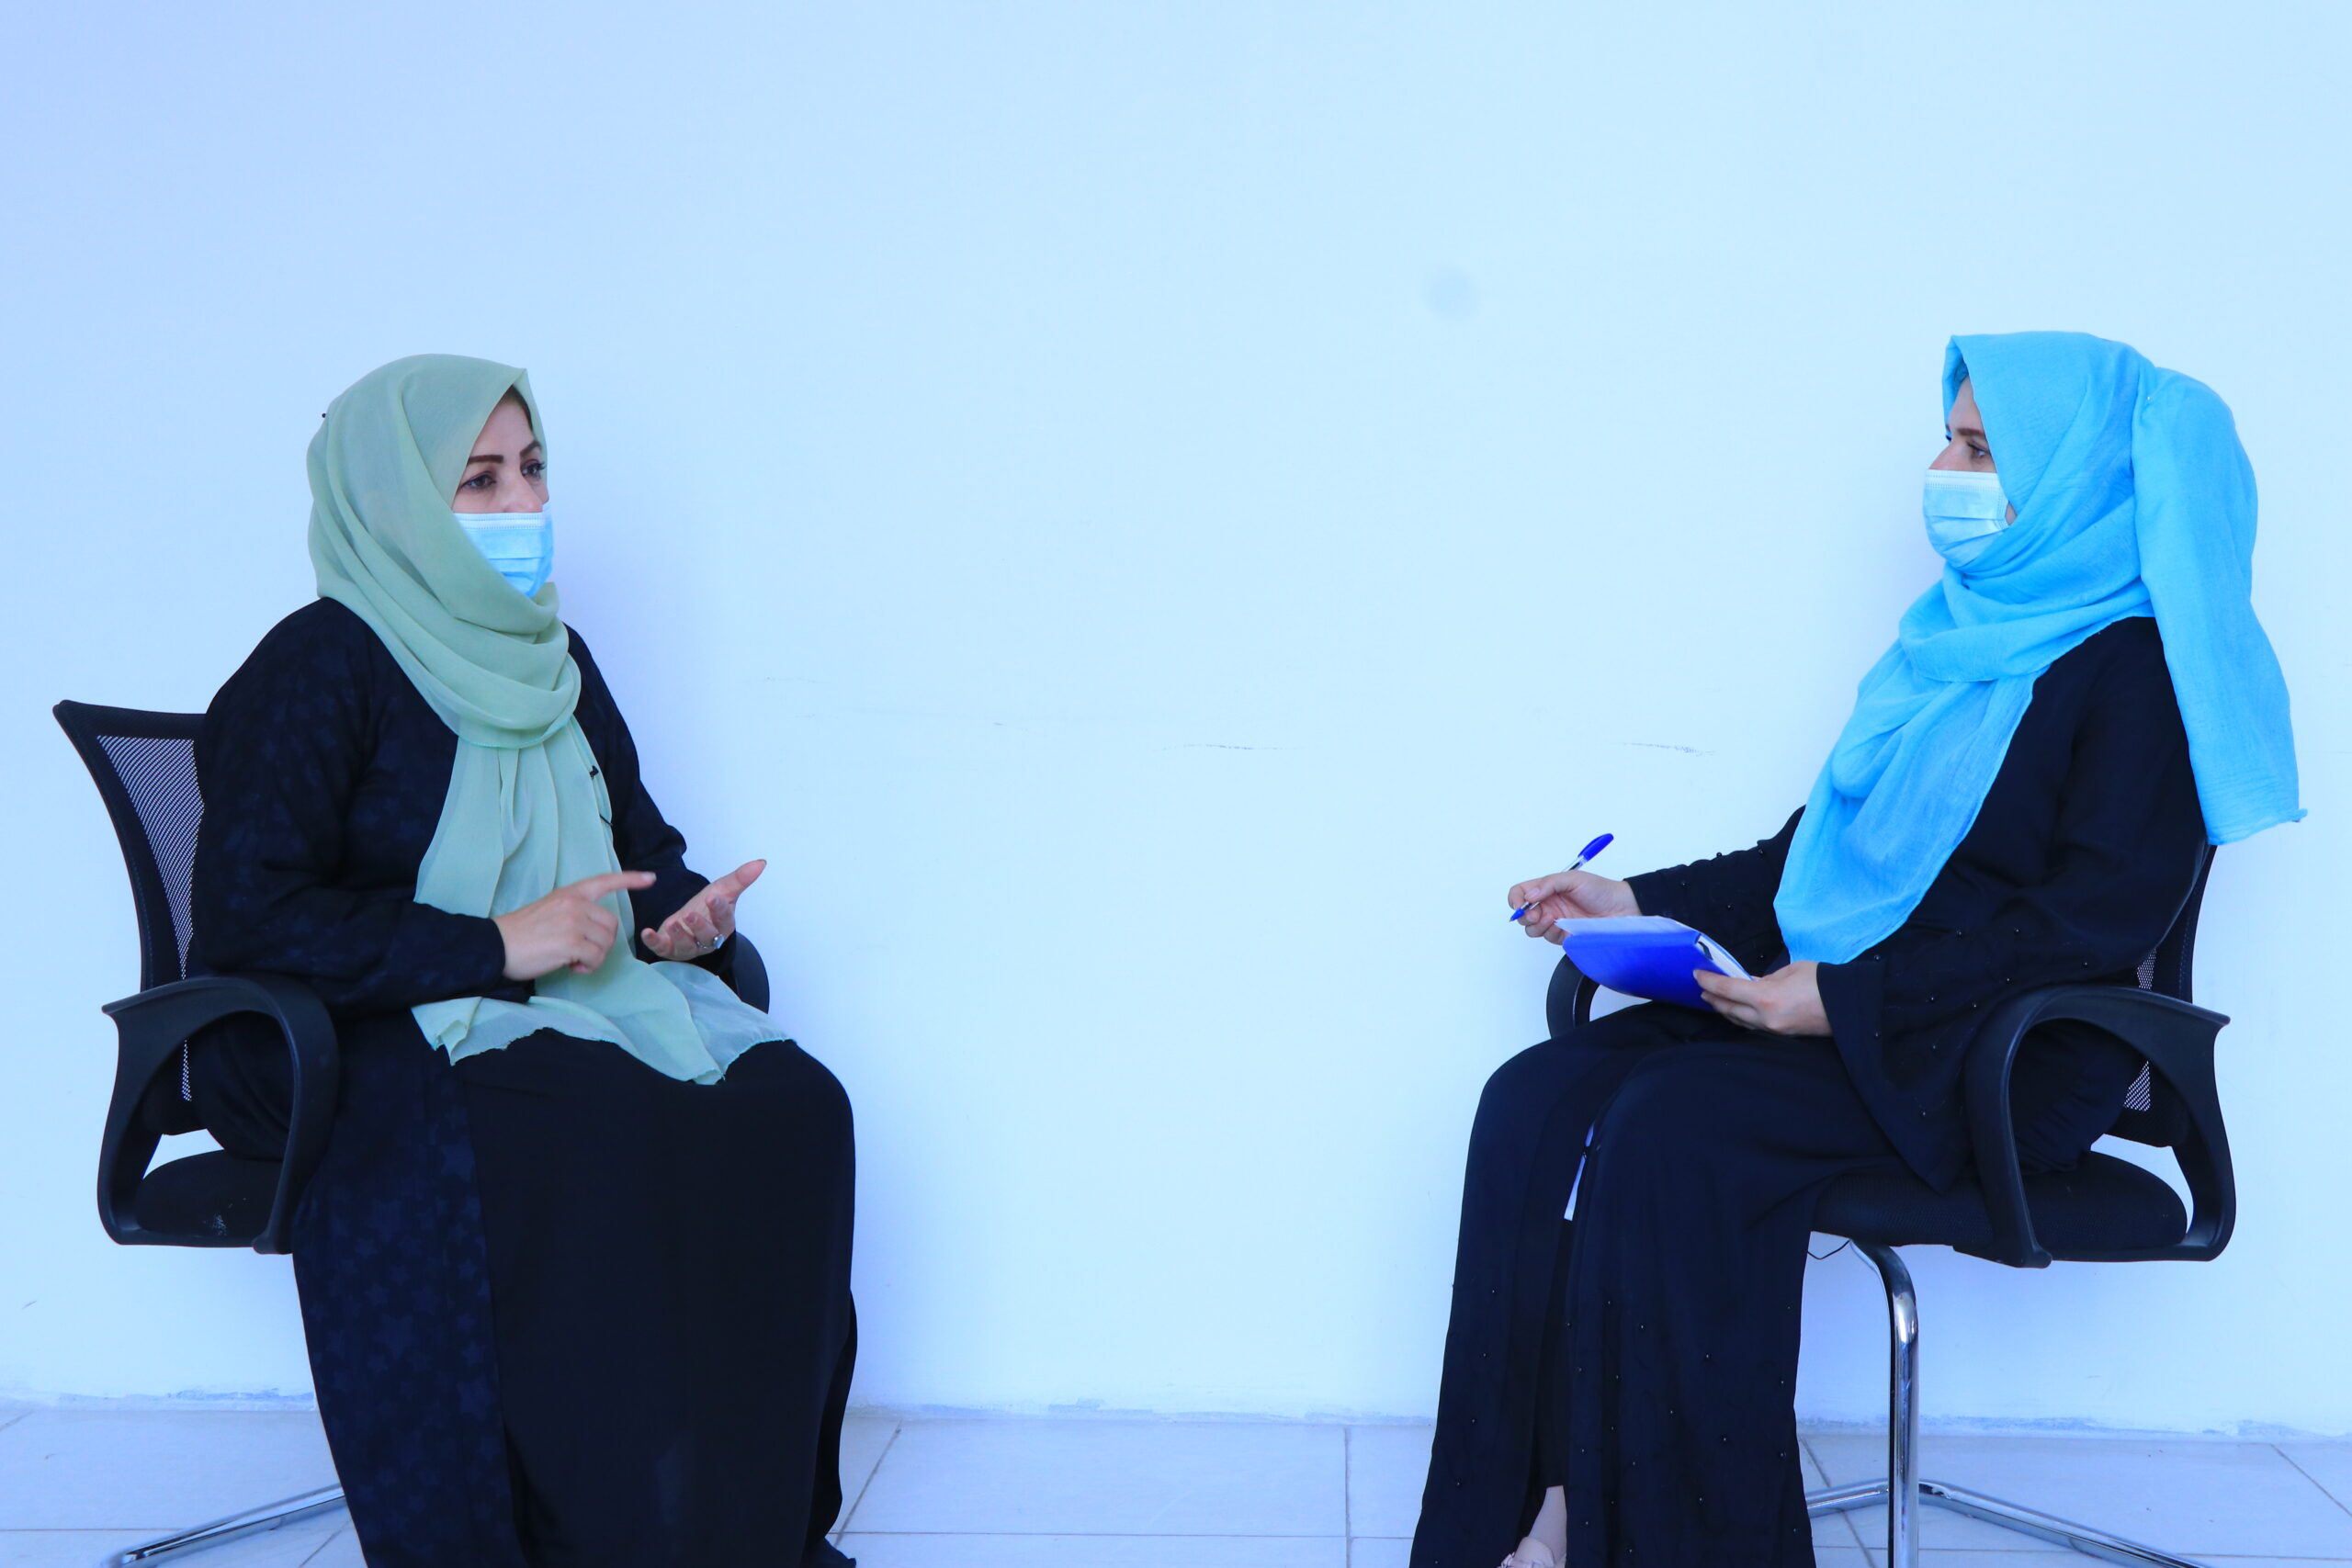 Businesswomen’s strength doubles after political change: Hafizi